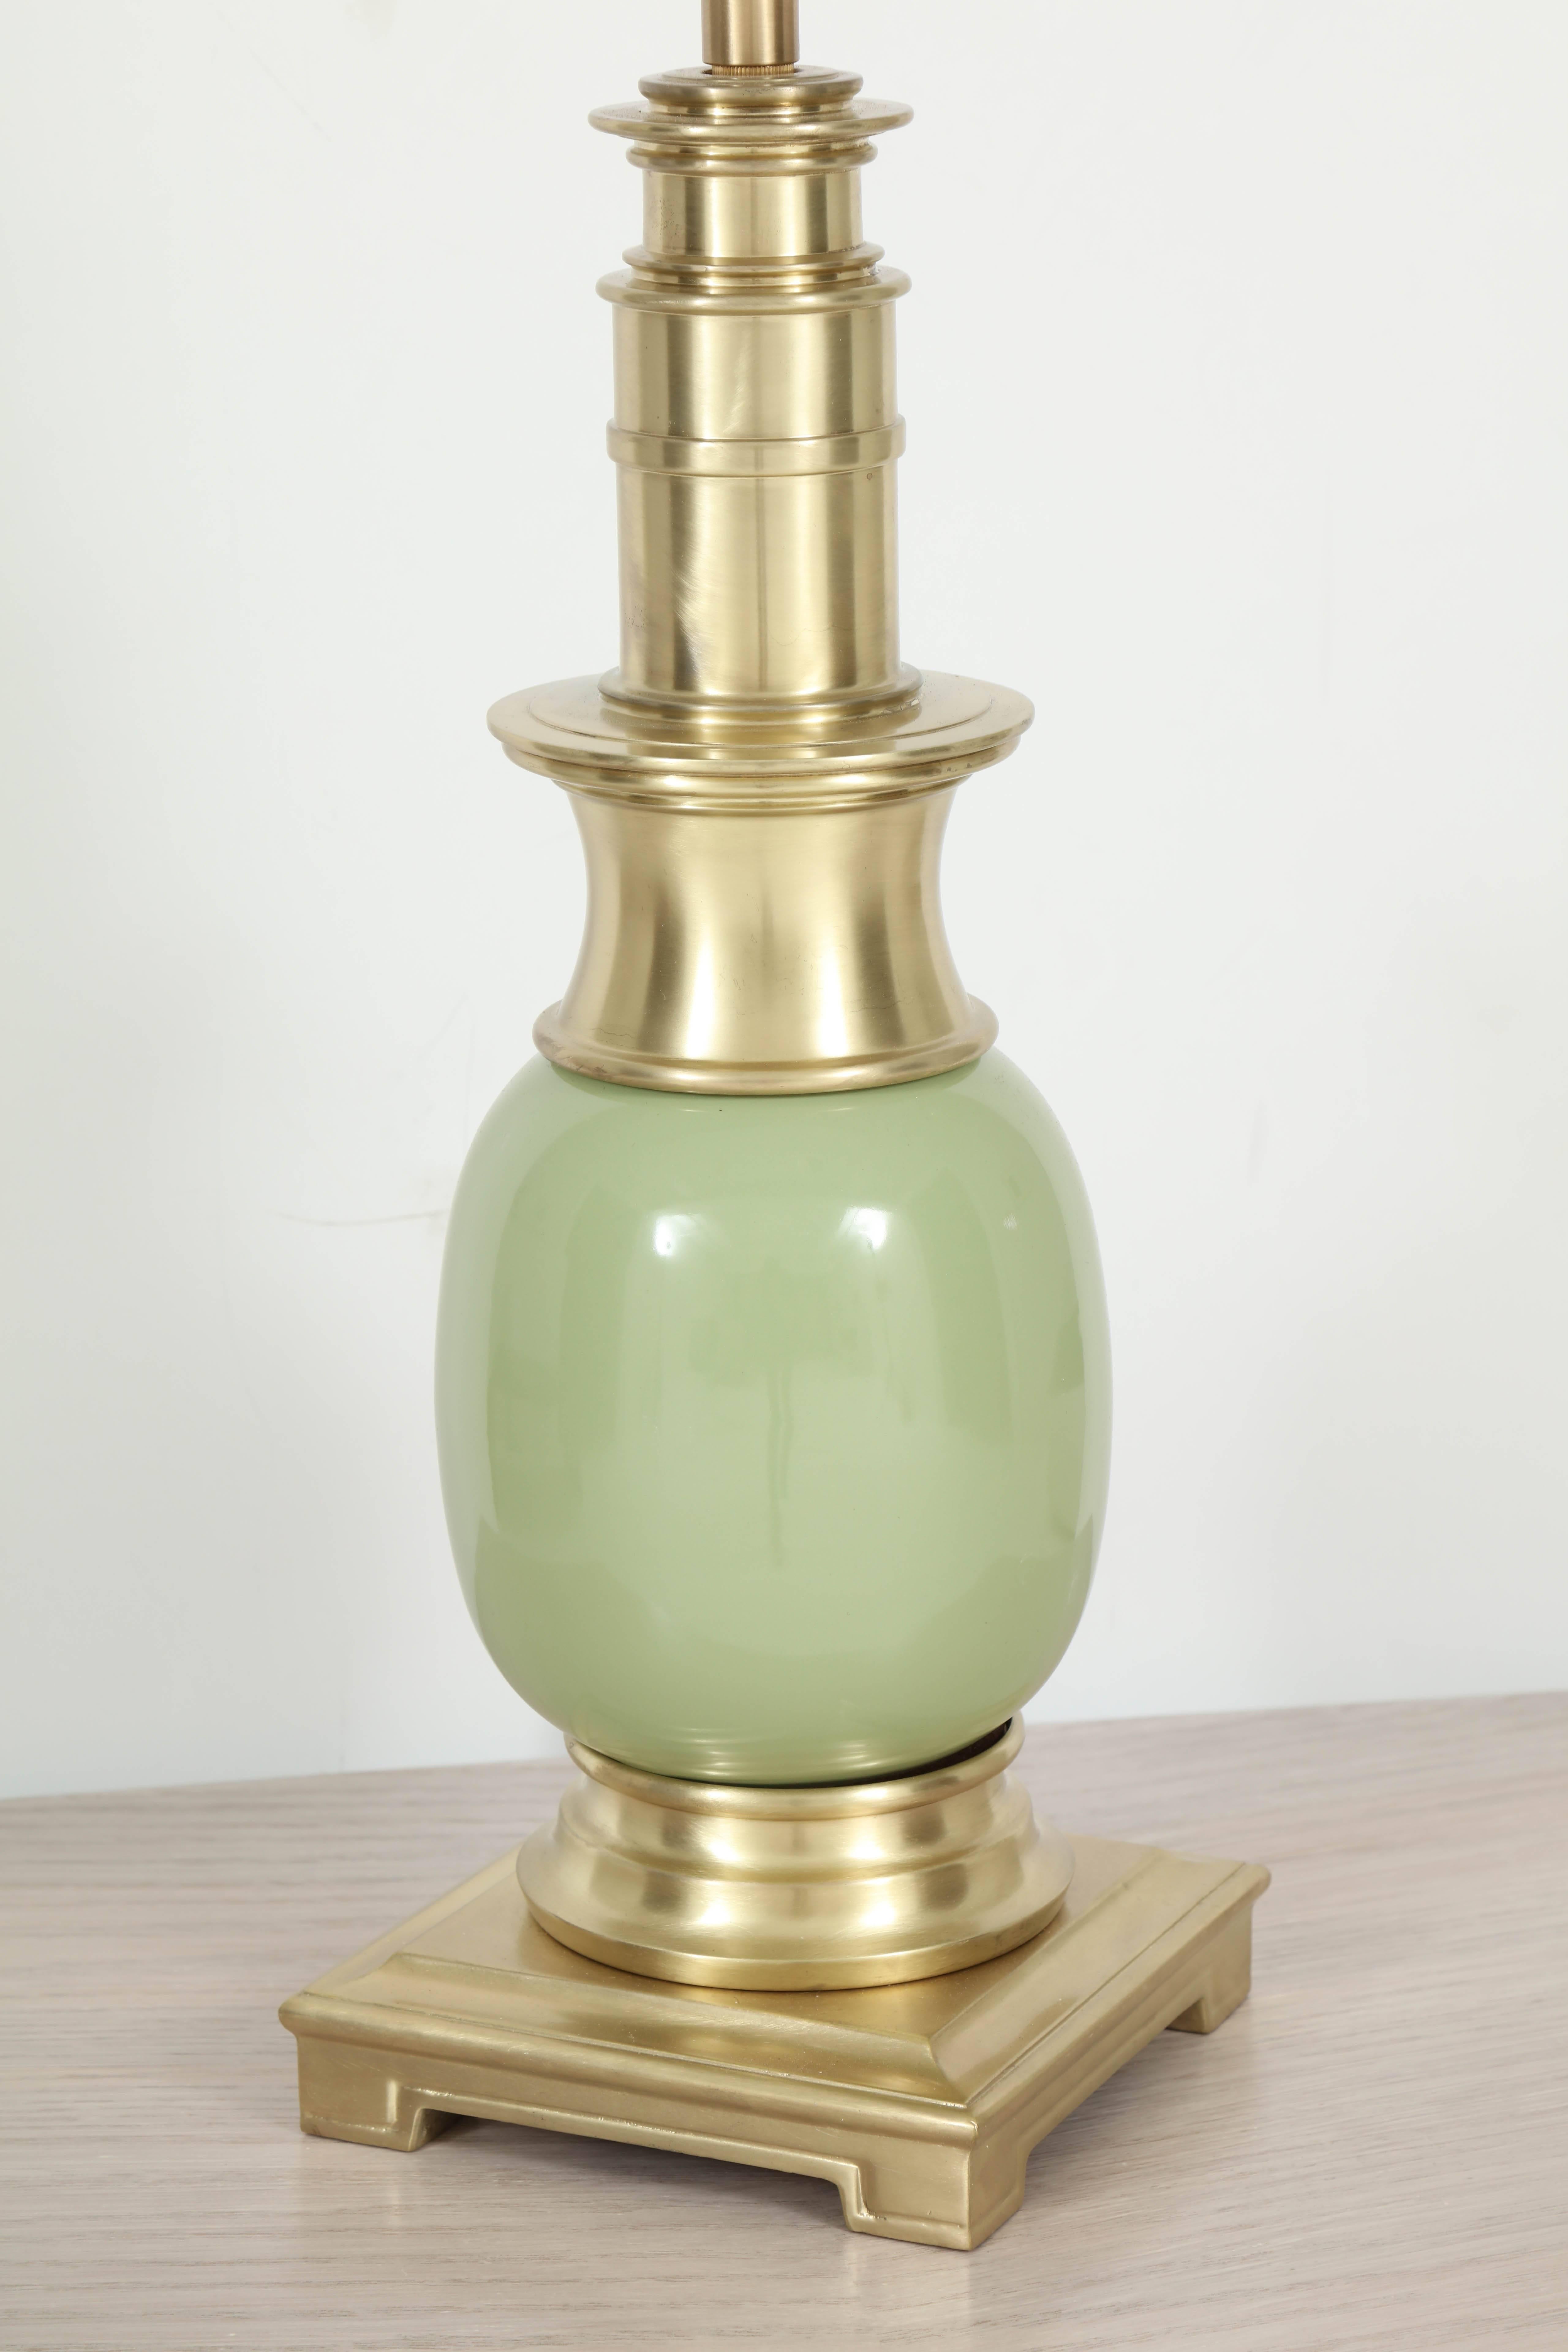 20th Century Stiffel Celadon Green Ceramic and Brass Lamps